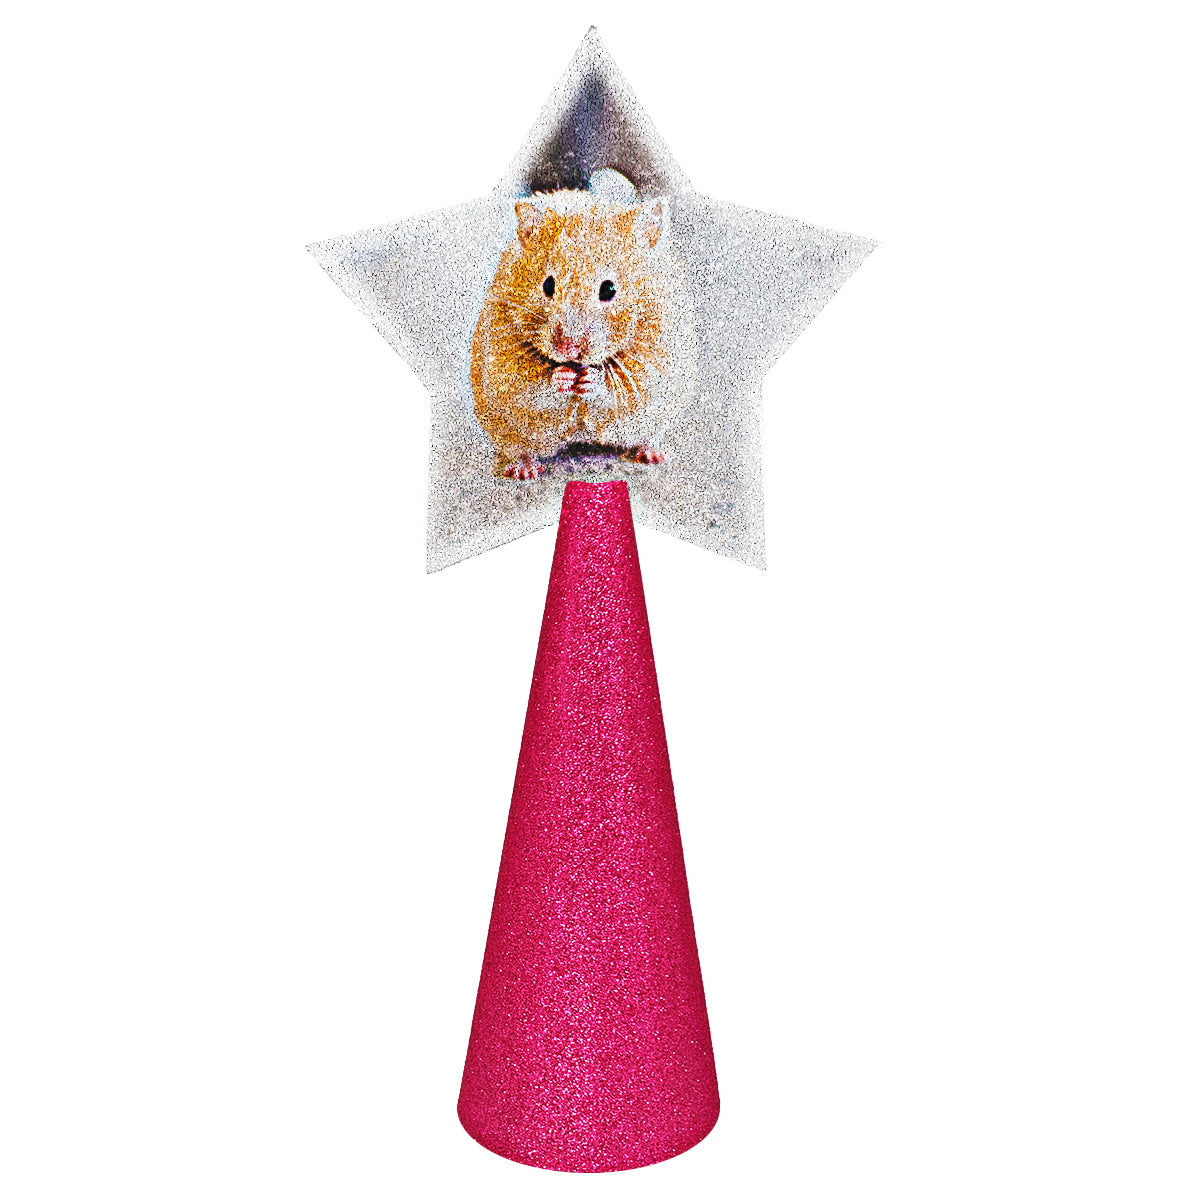 hamster - sample custom christmas tree topper - star-shaped photo on hot pink glitter cone